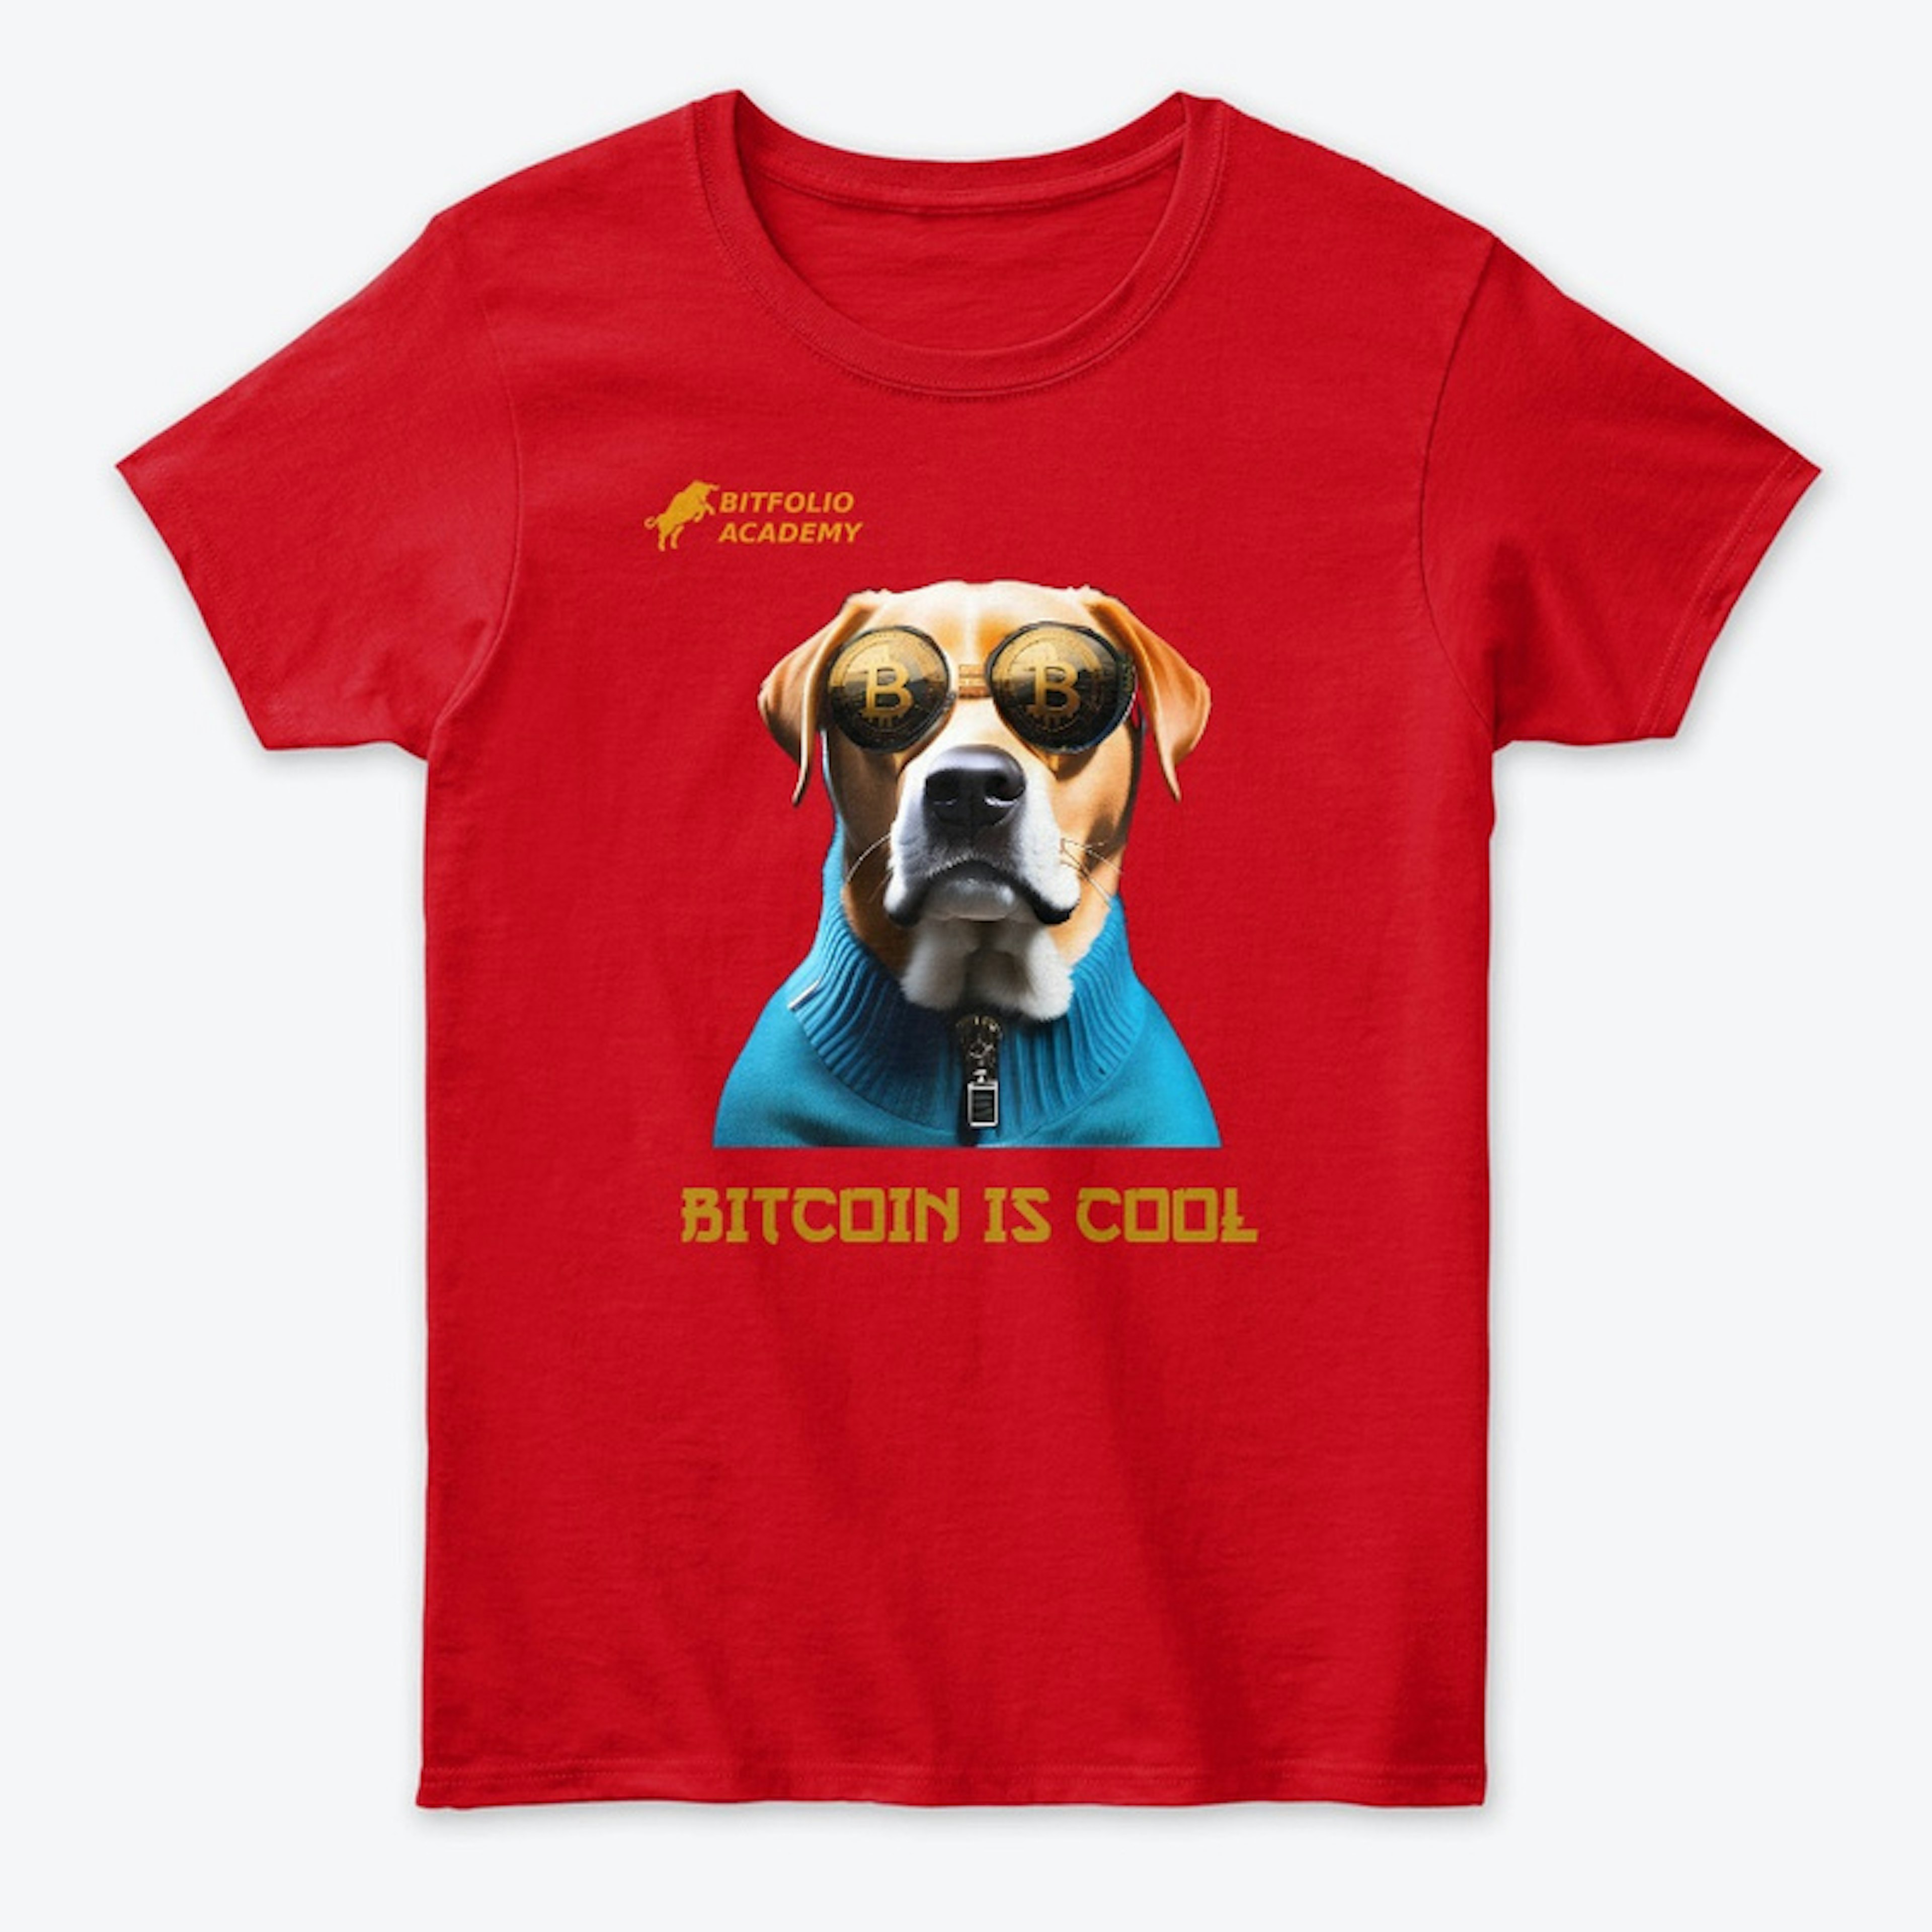 Join the Bitcoin Canine Club